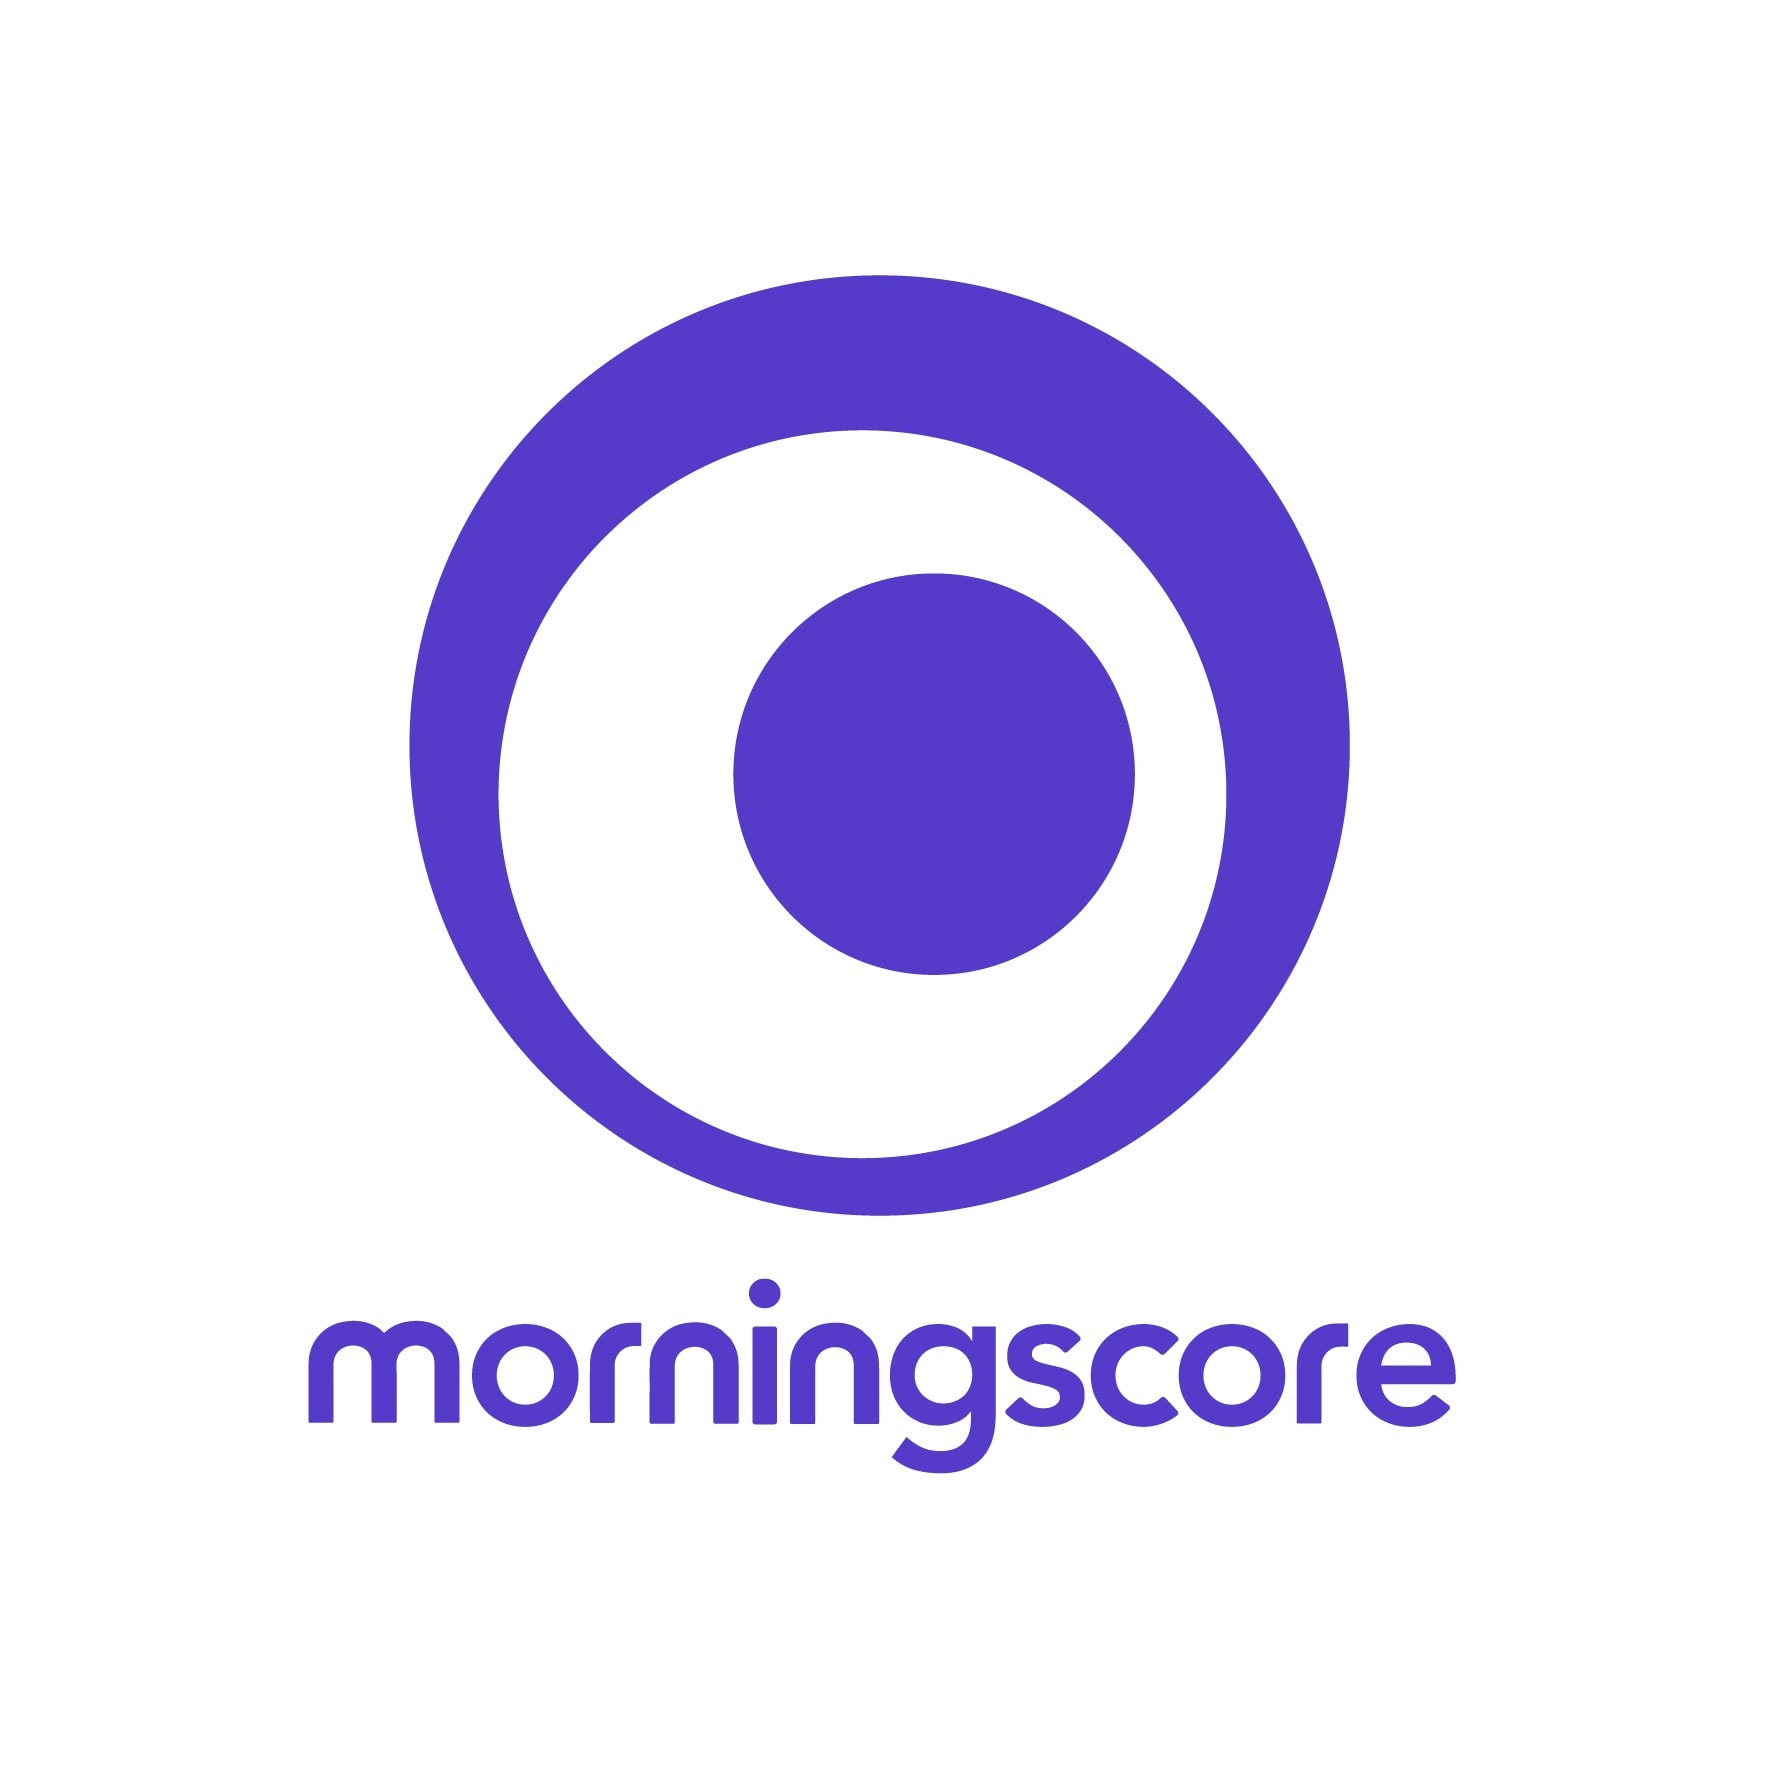 Morningscore's logo